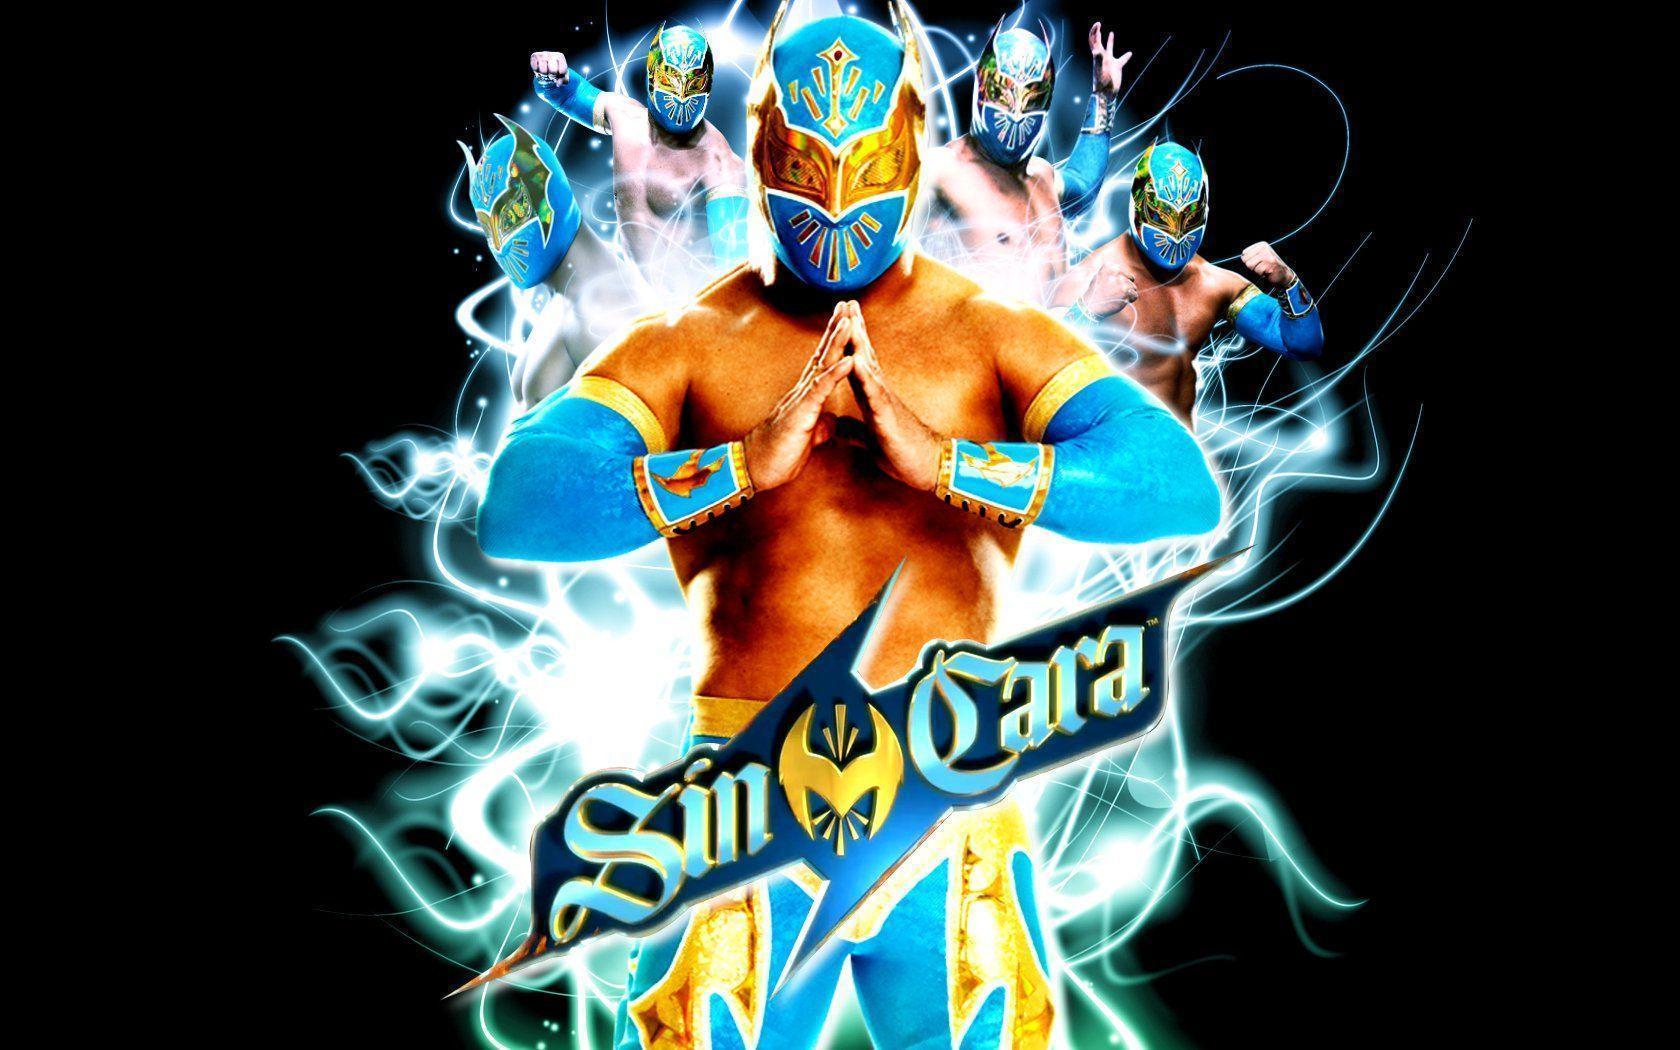 Sin Cara Wallpaper Superstars, WWE Wallpaper, WWE PPV&;s